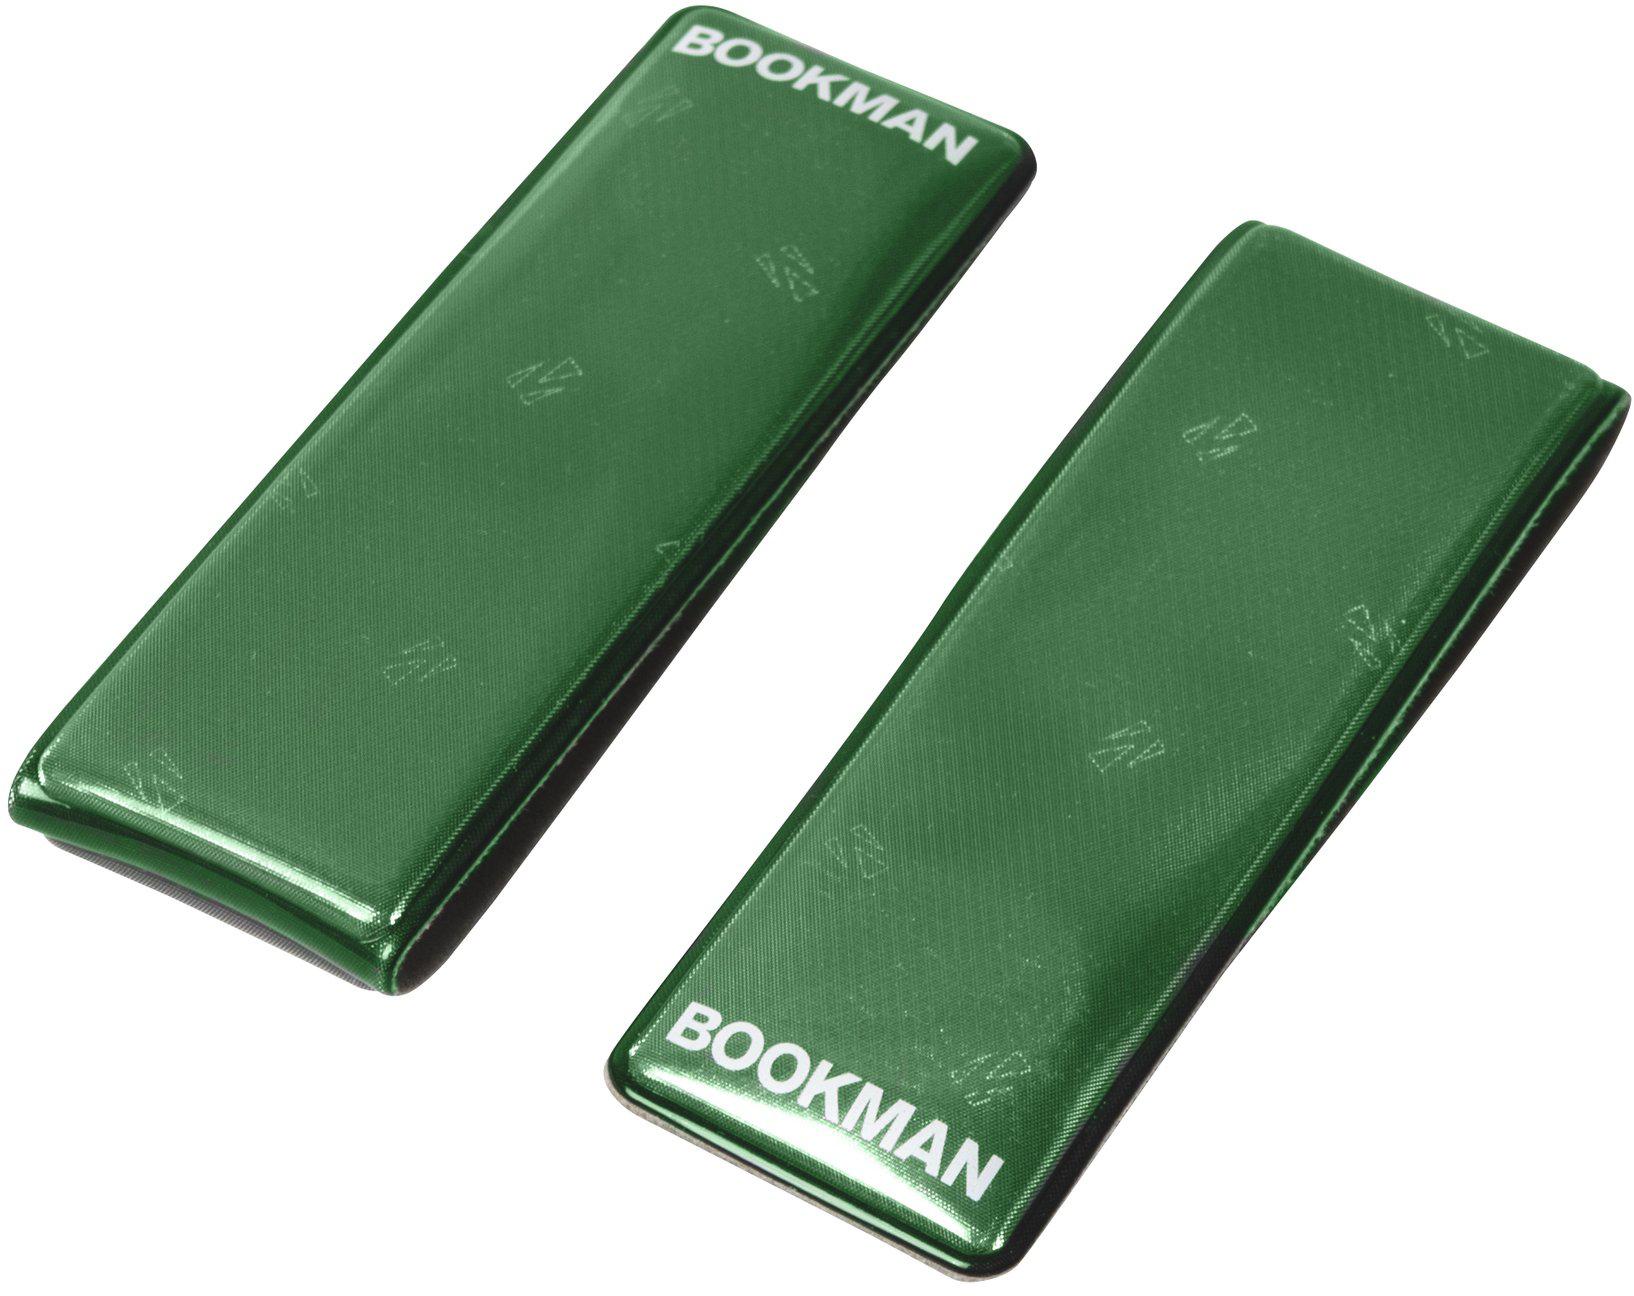 Bookman Magnetic Clip-on Reflectors - Green